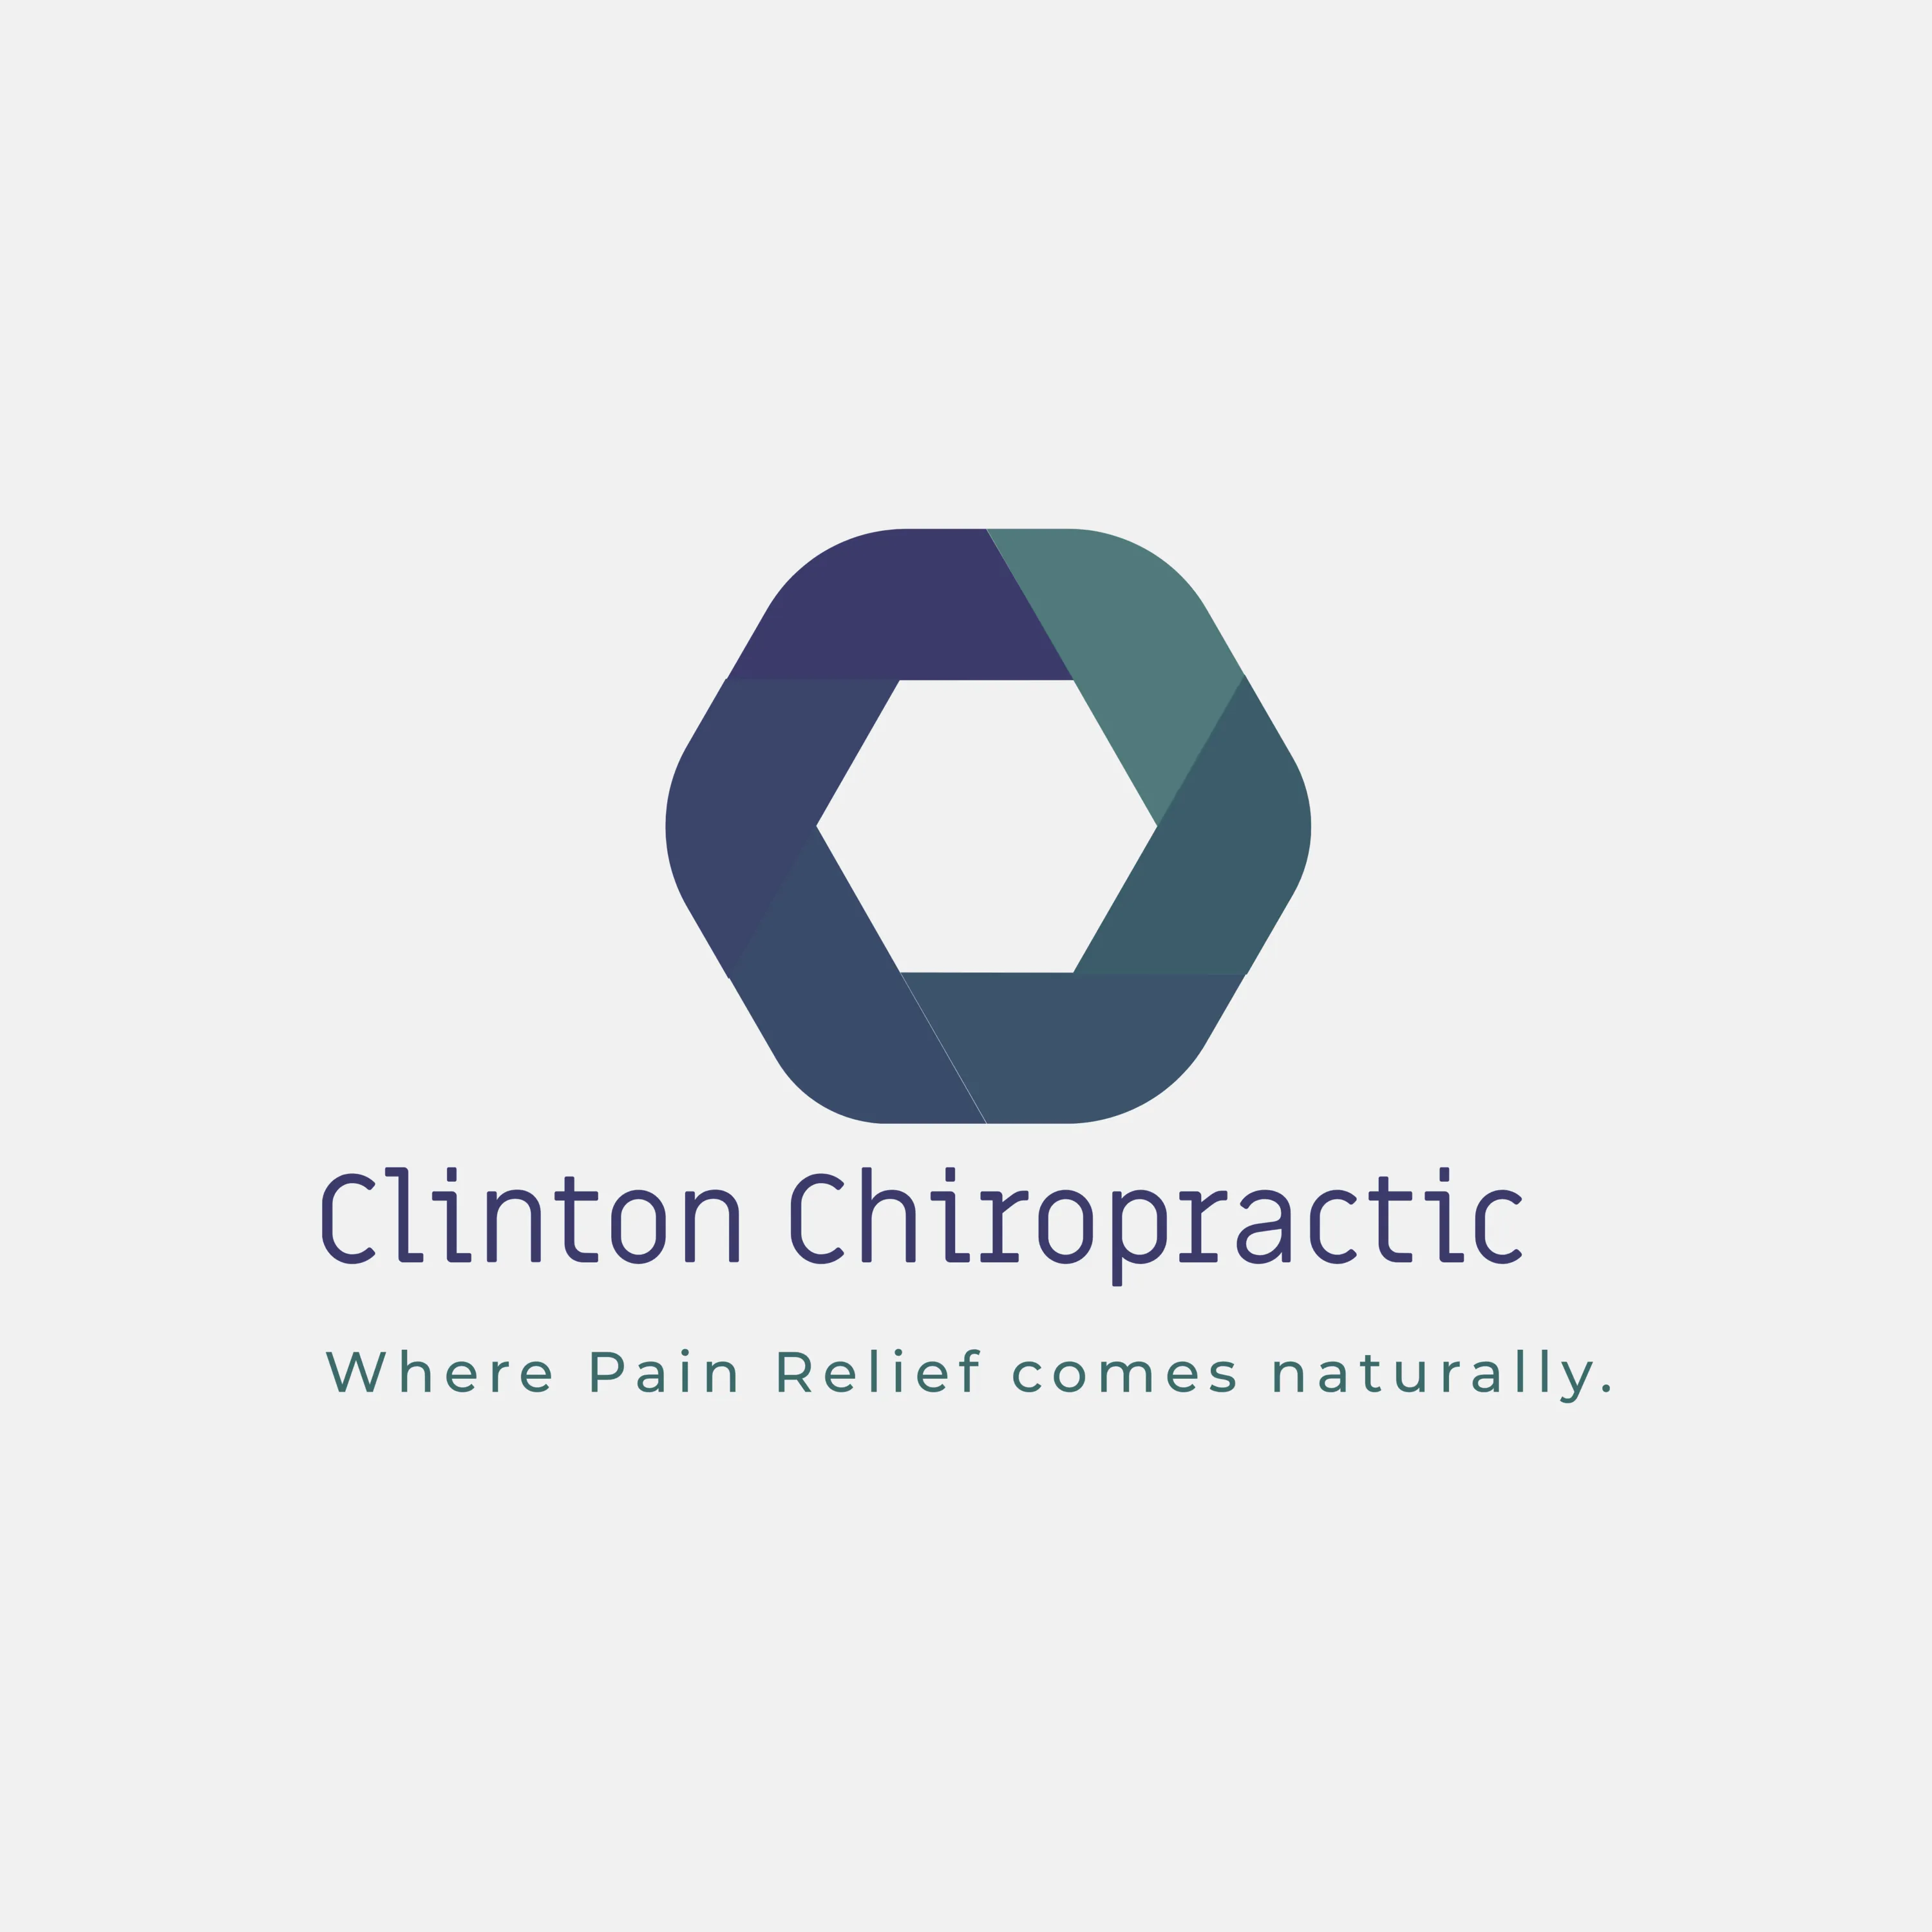 Clinton Chiropractic